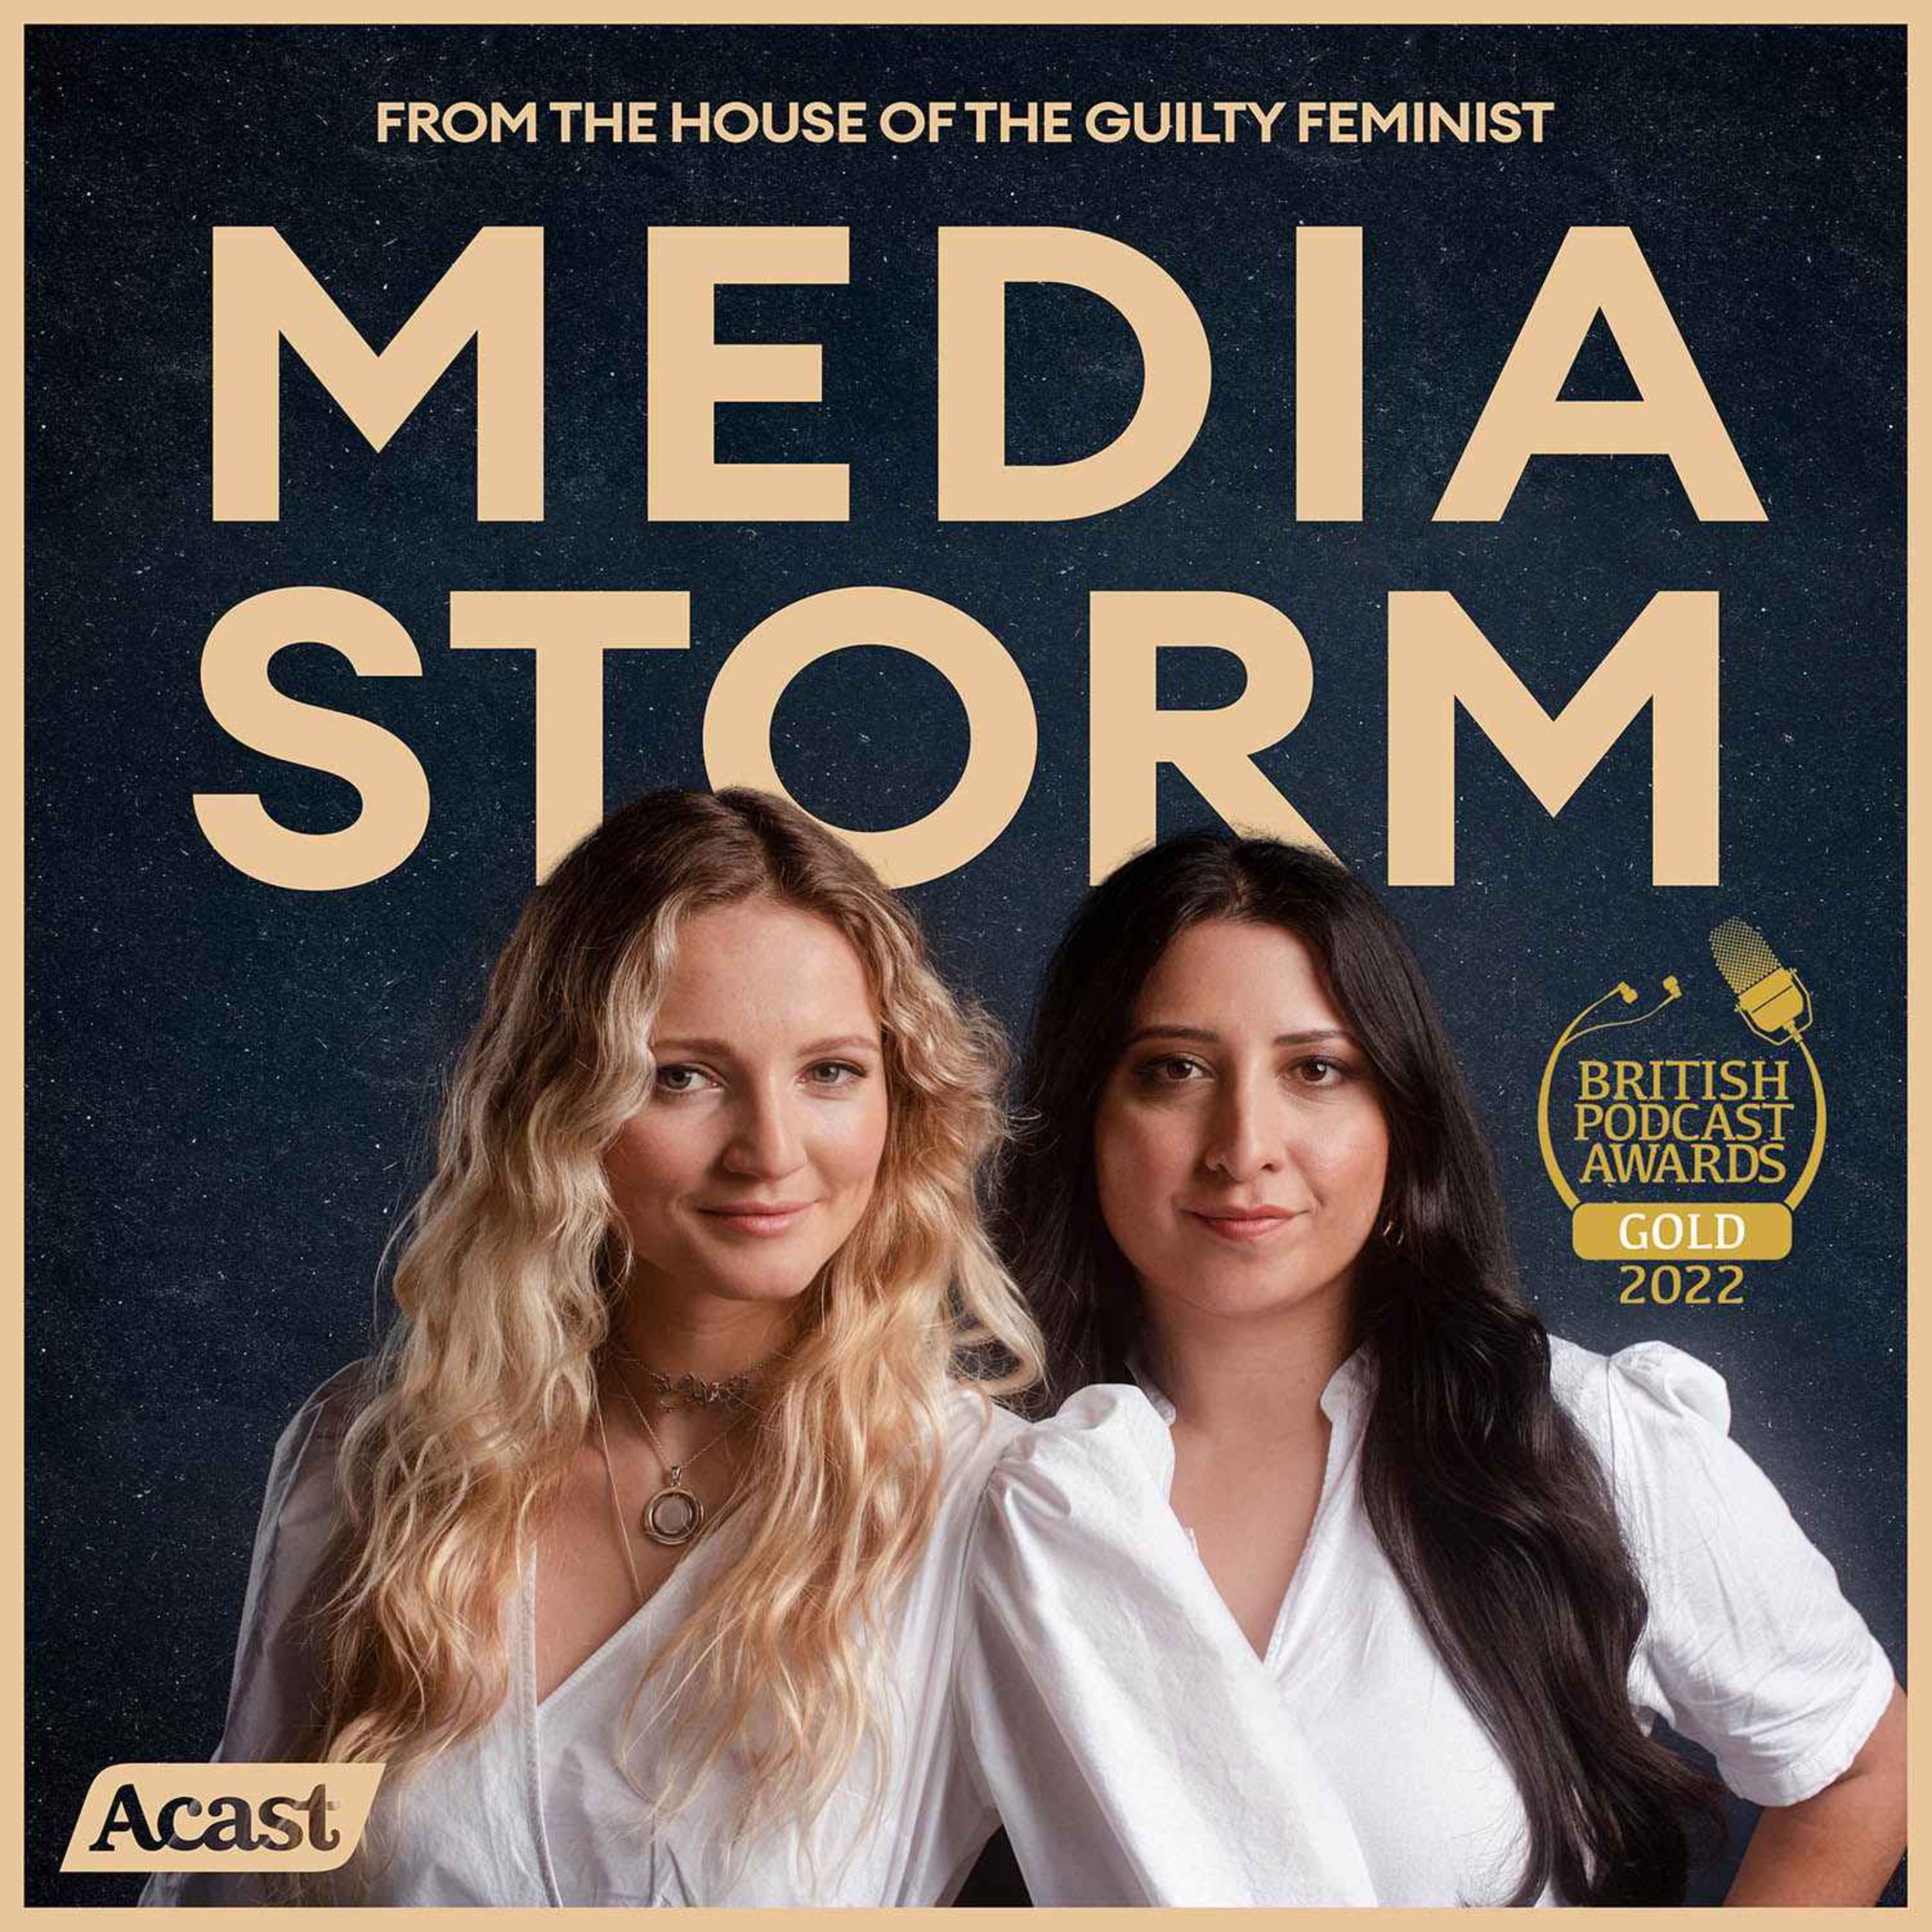 Behind the scenes of Media Storm!